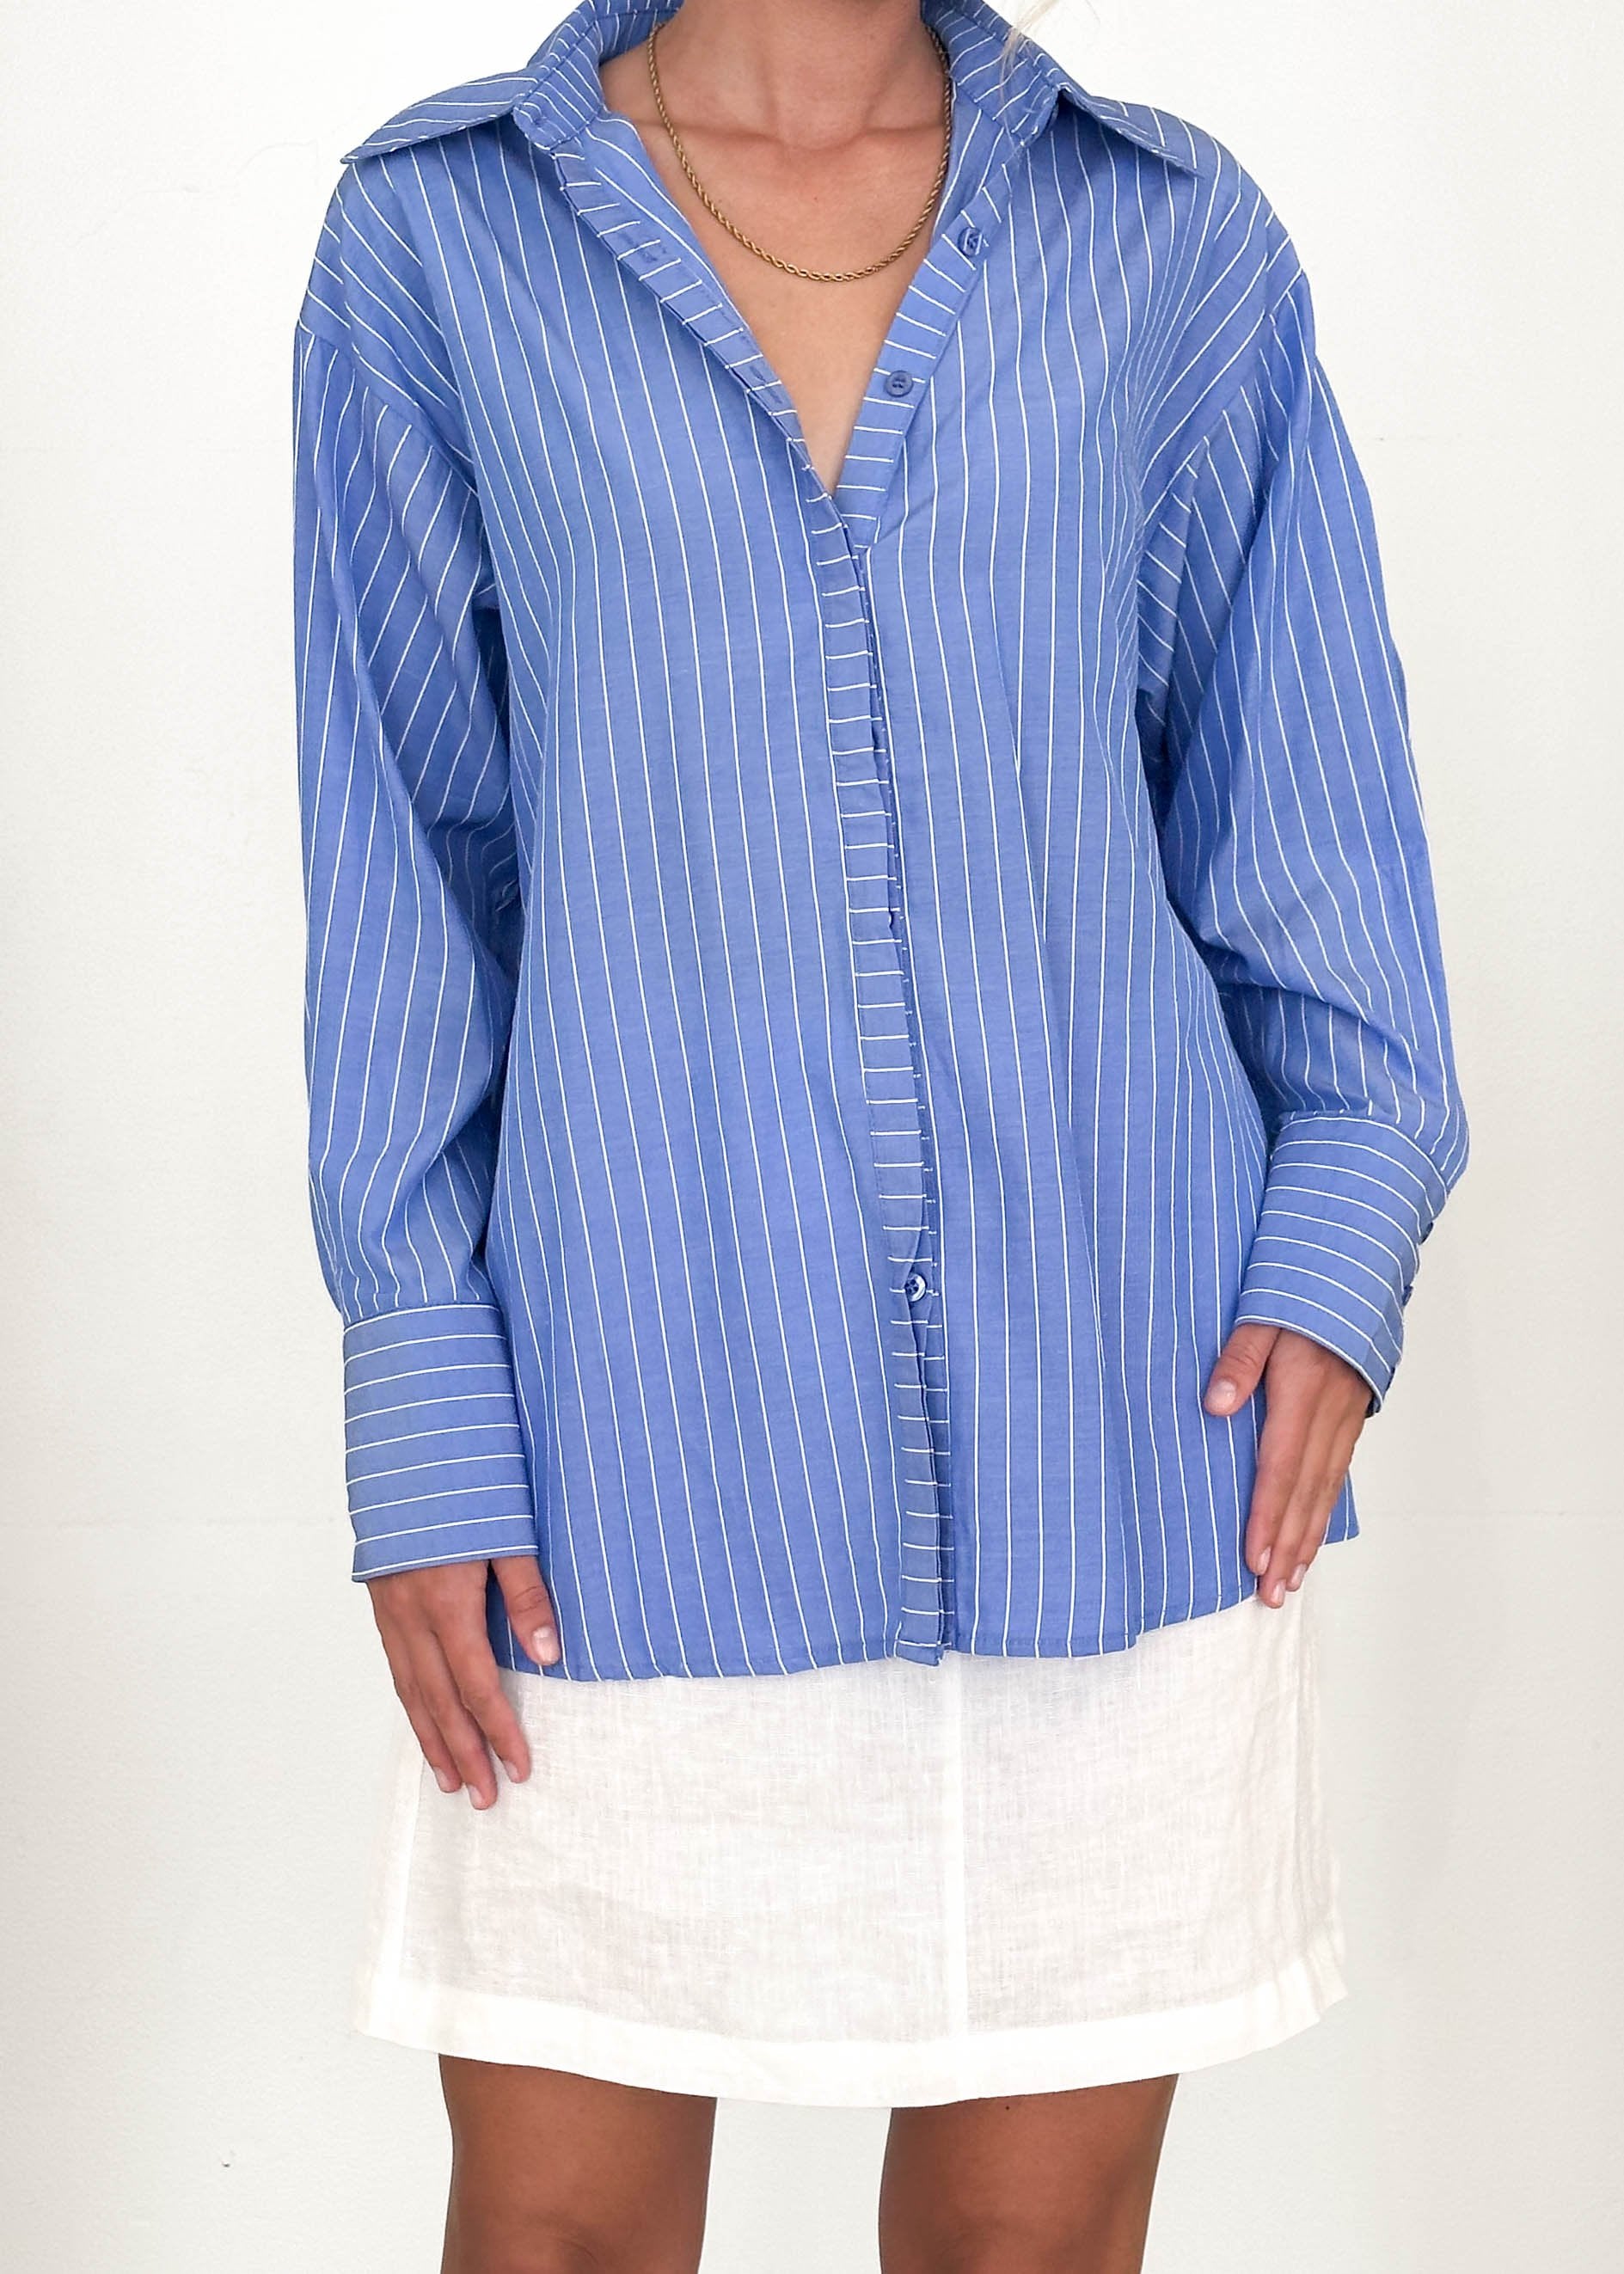 Fellina Shirt - Blue Stripe